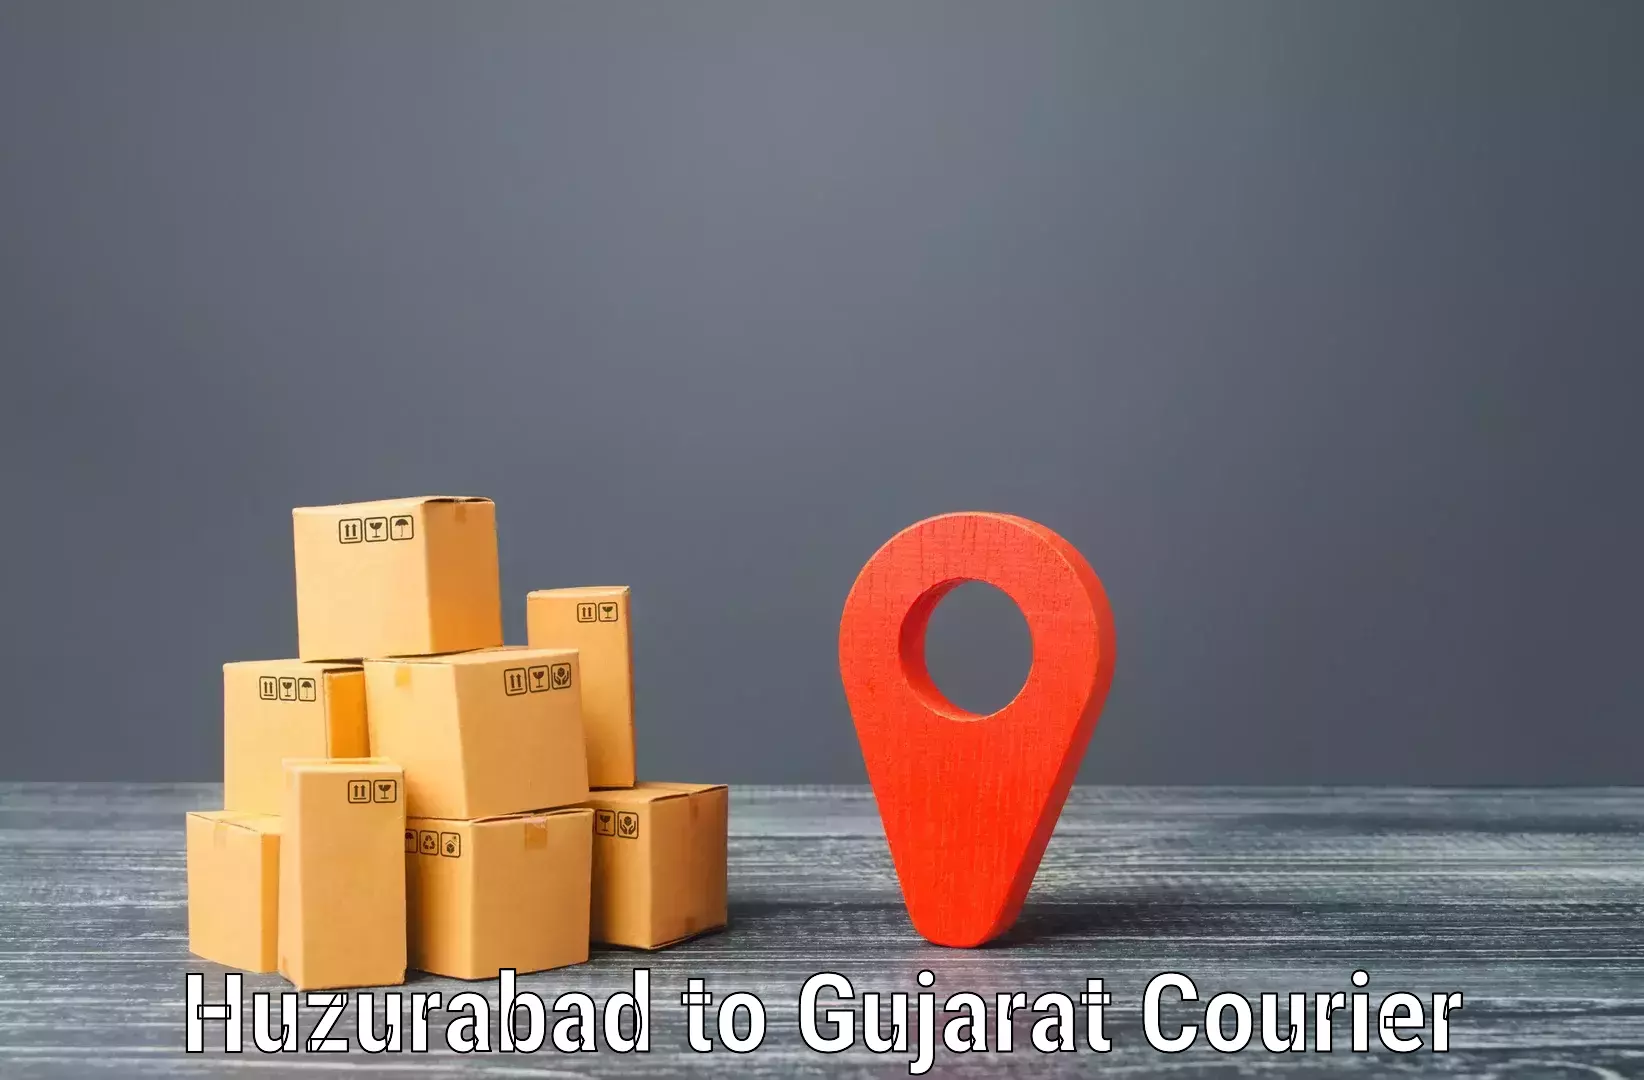 Logistics service provider Huzurabad to Dhrol